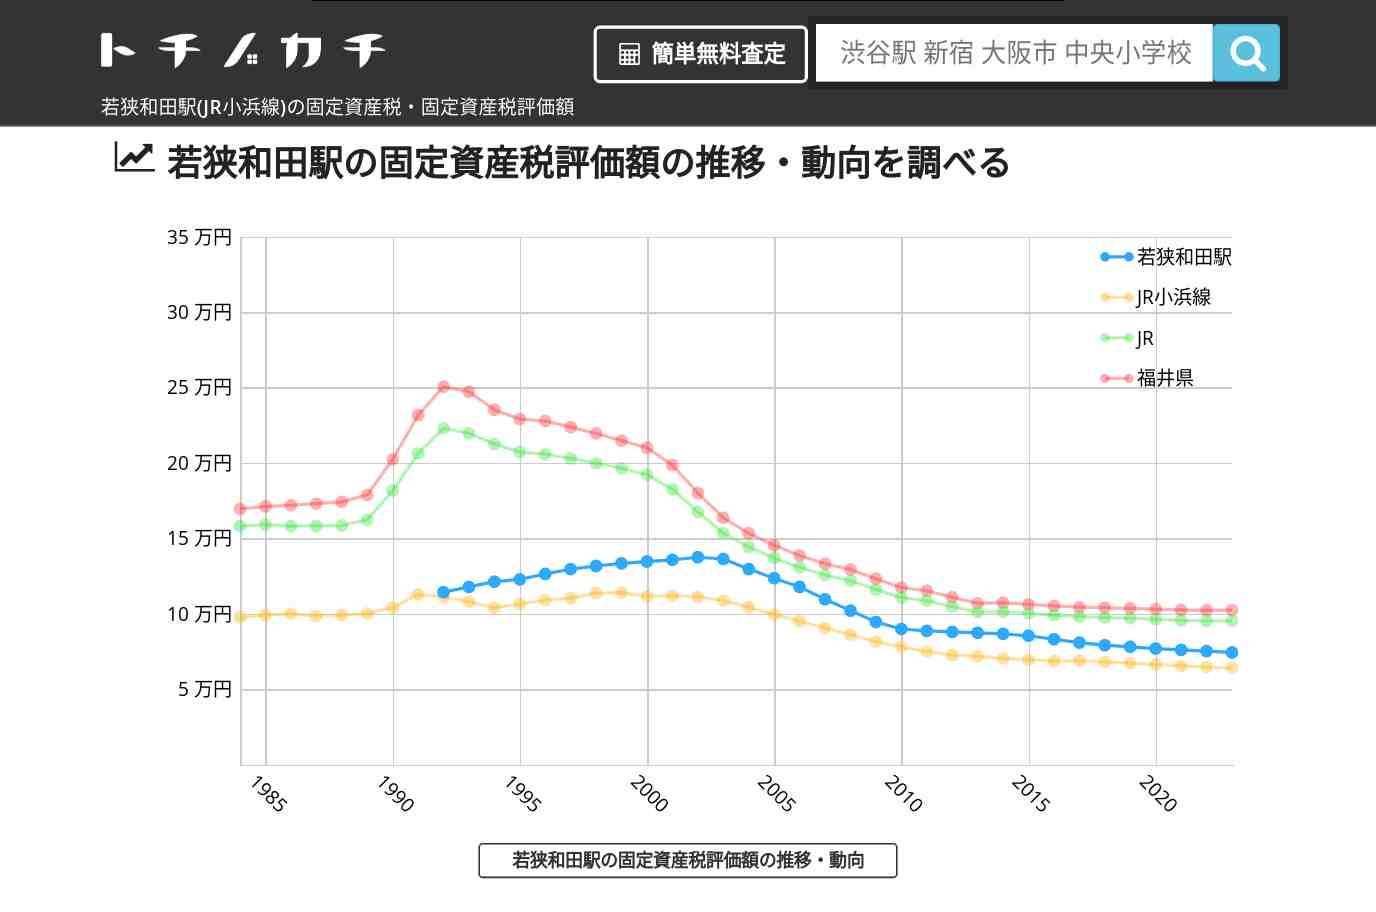 若狭和田駅(JR小浜線)の固定資産税・固定資産税評価額 | トチノカチ